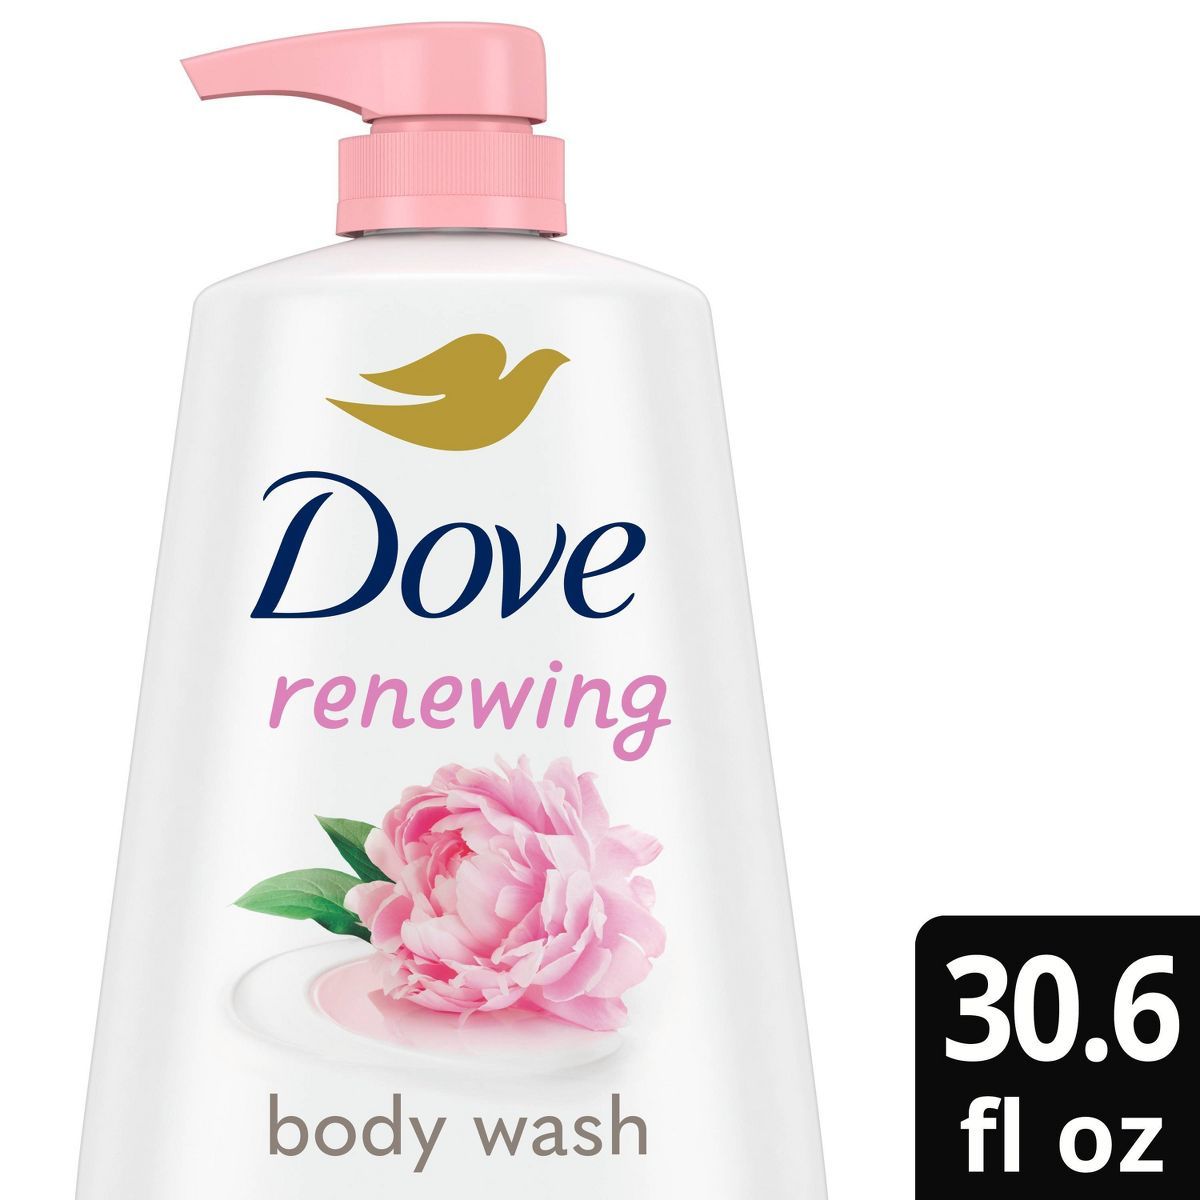 Dove Beauty Renewing Body Wash Pump - Peony & Rose Oil - 30.6 fl oz | Target